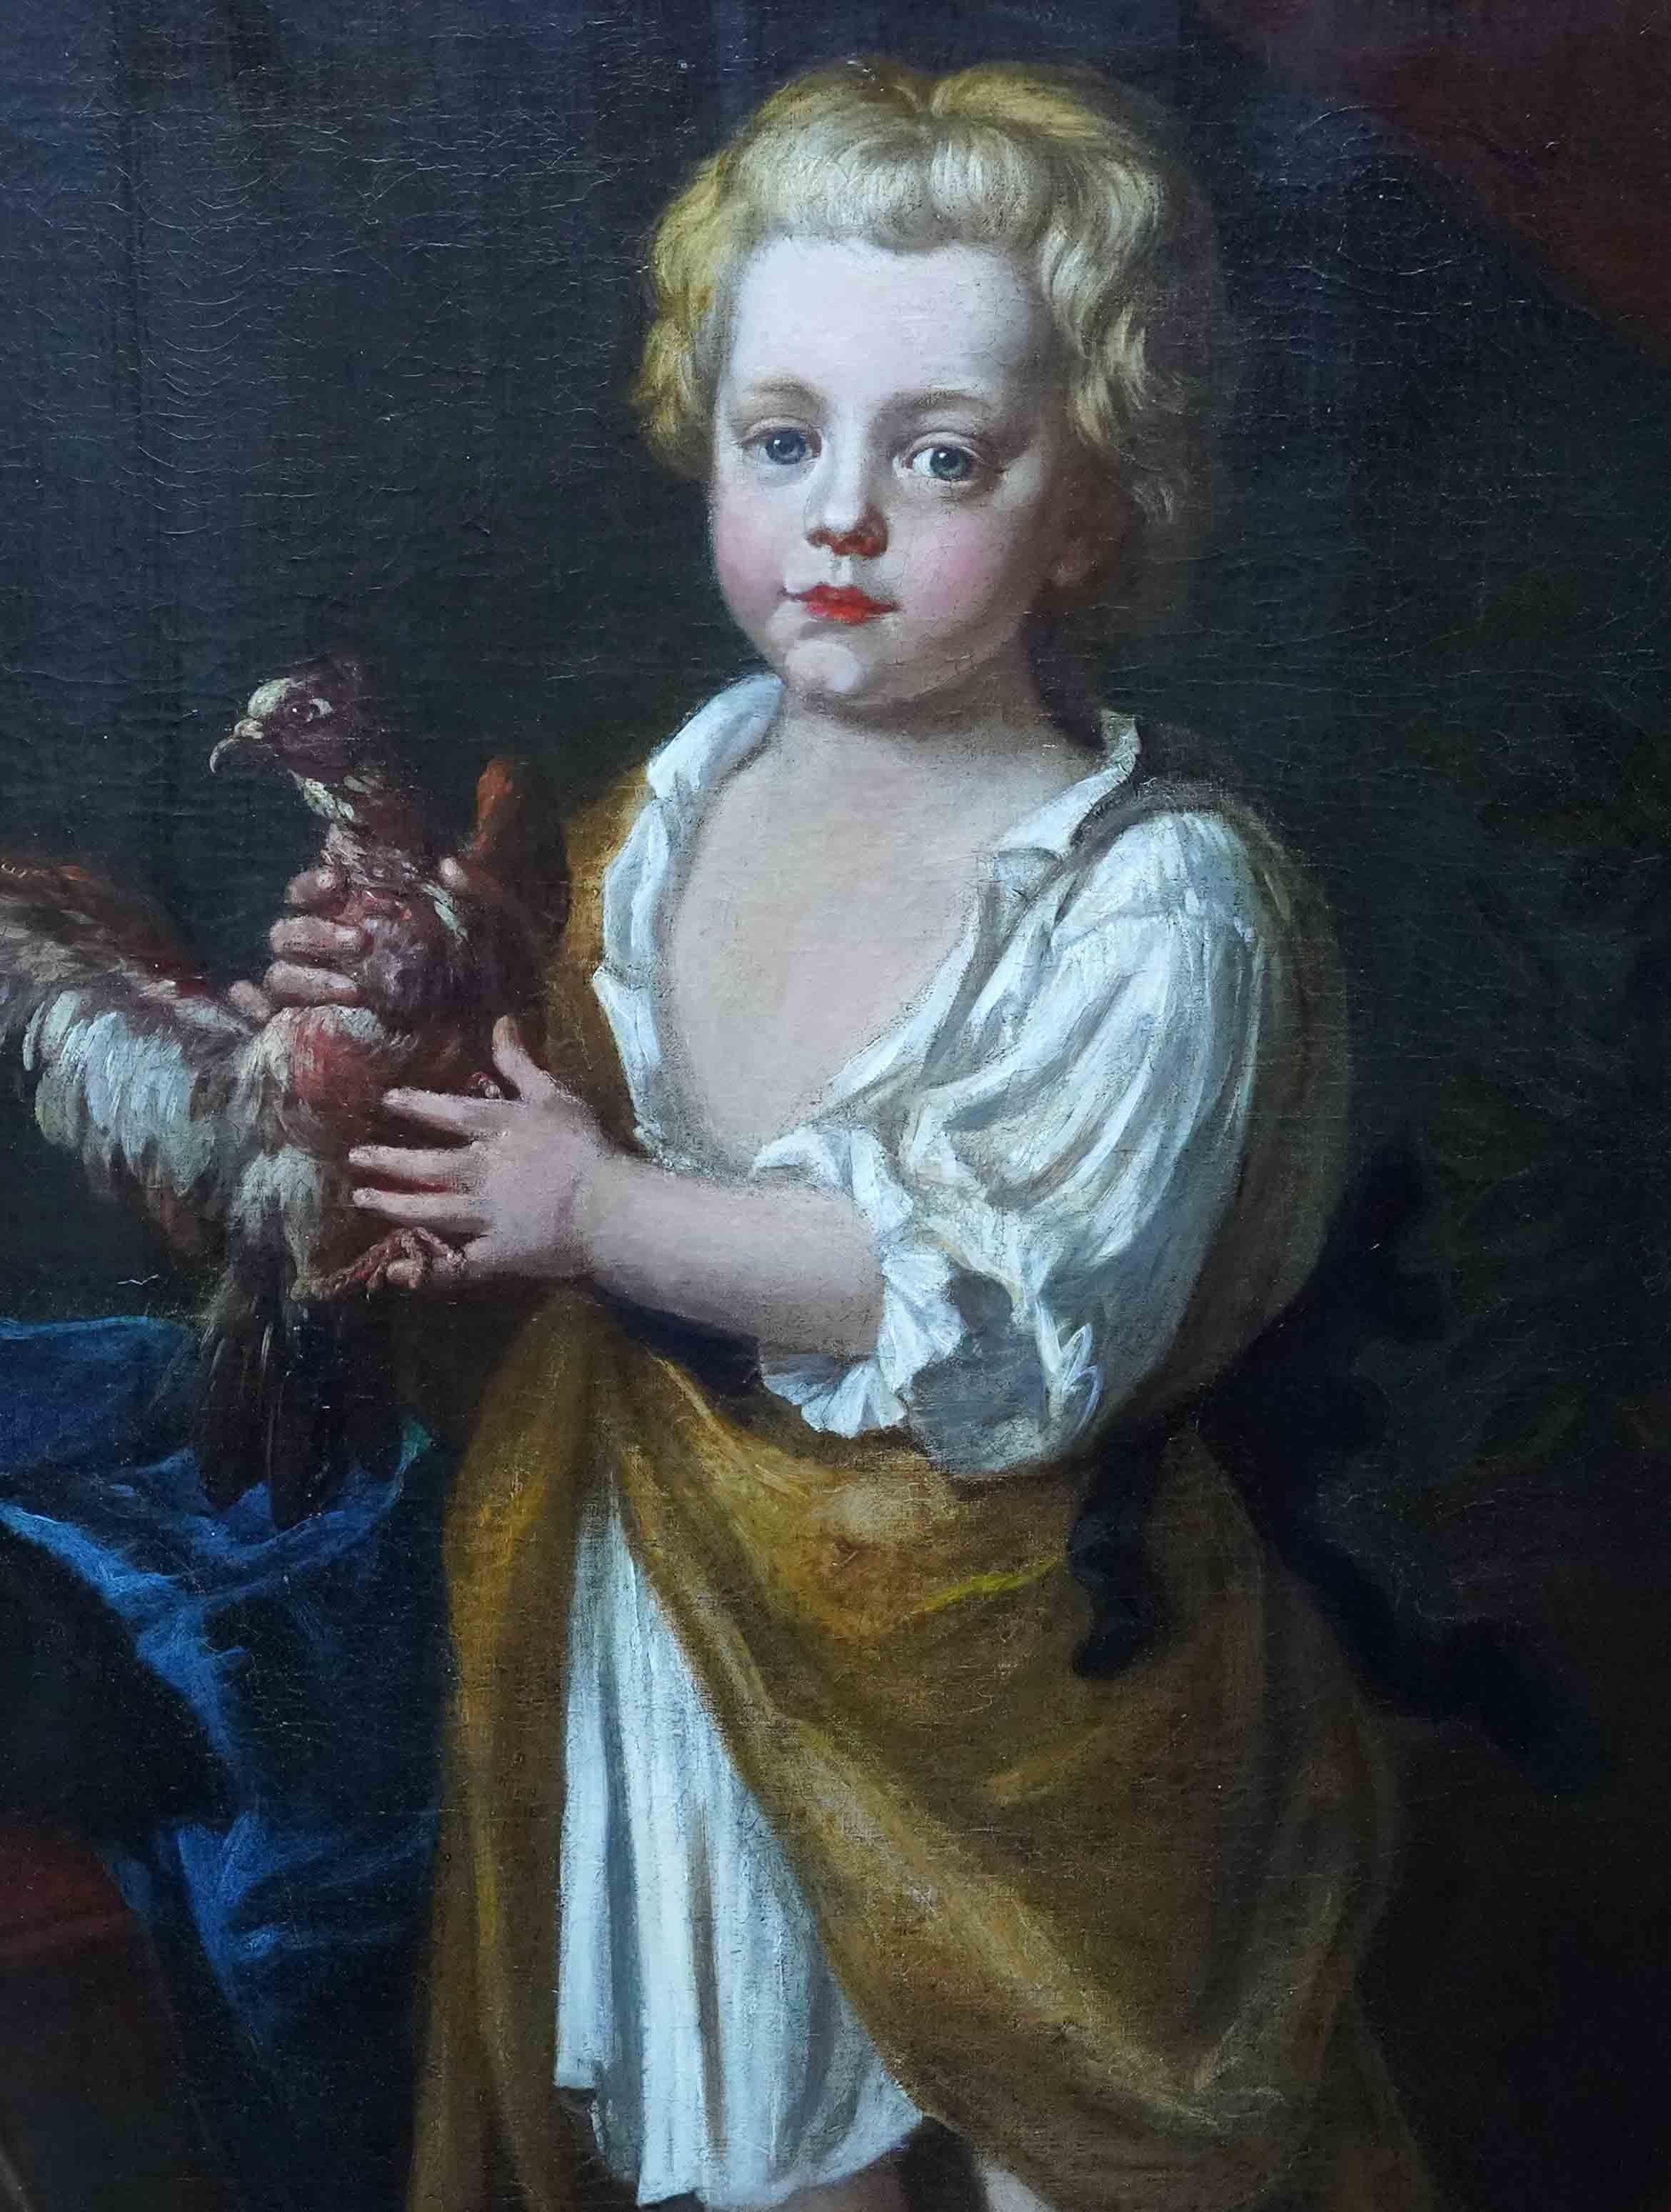 17th century boy